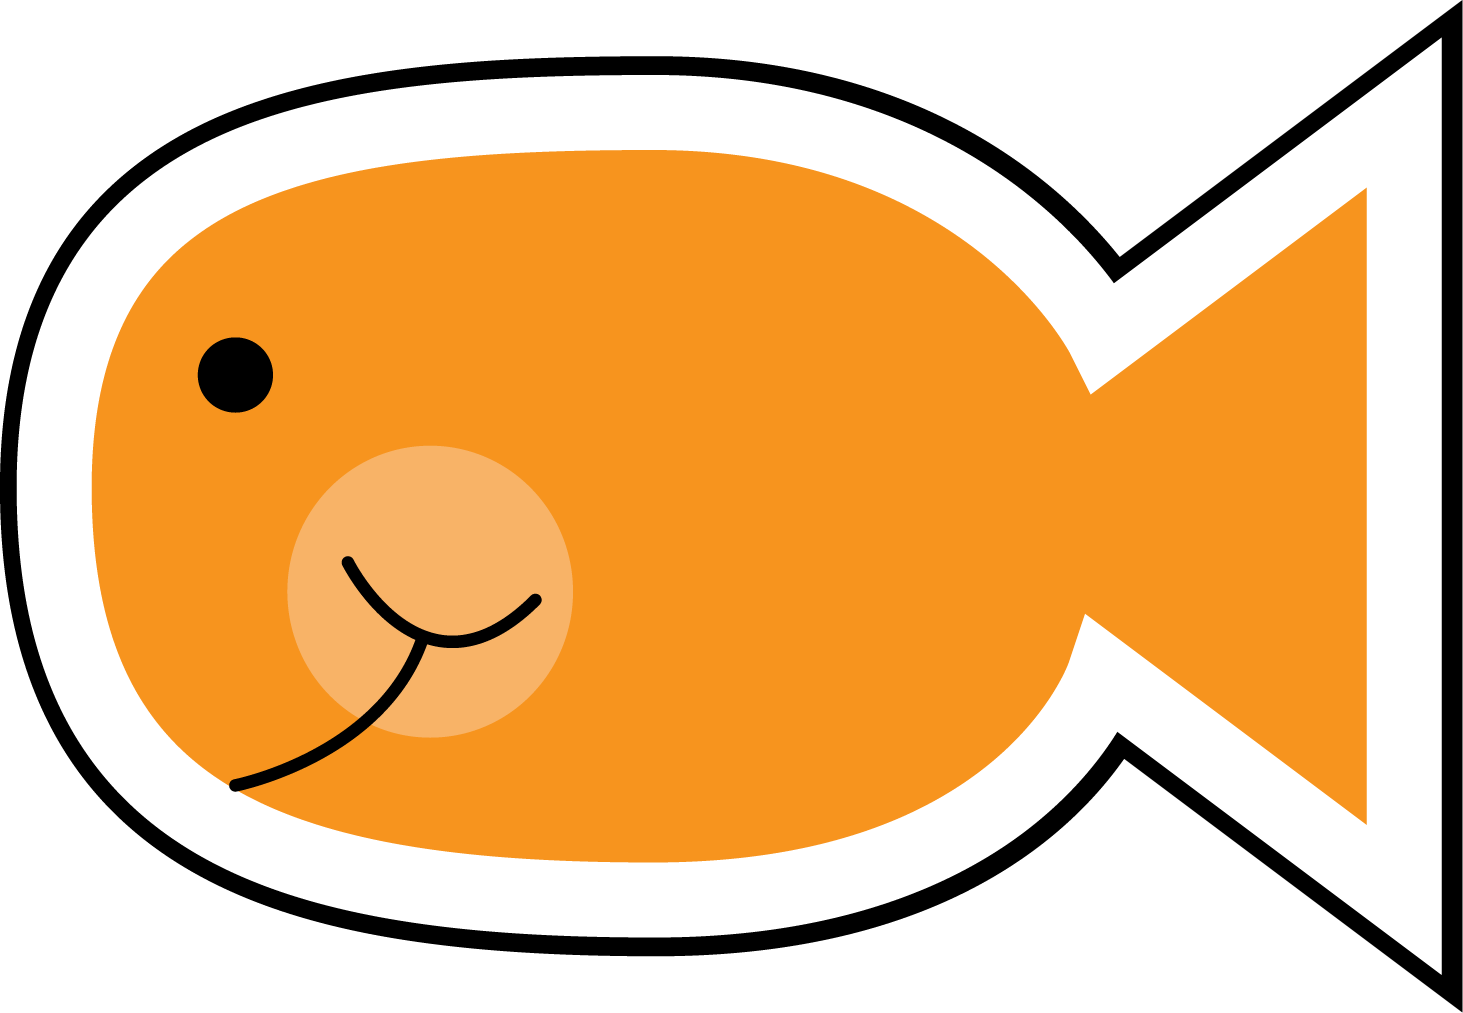 Cute Fish Clip Art - Free Clipart Images